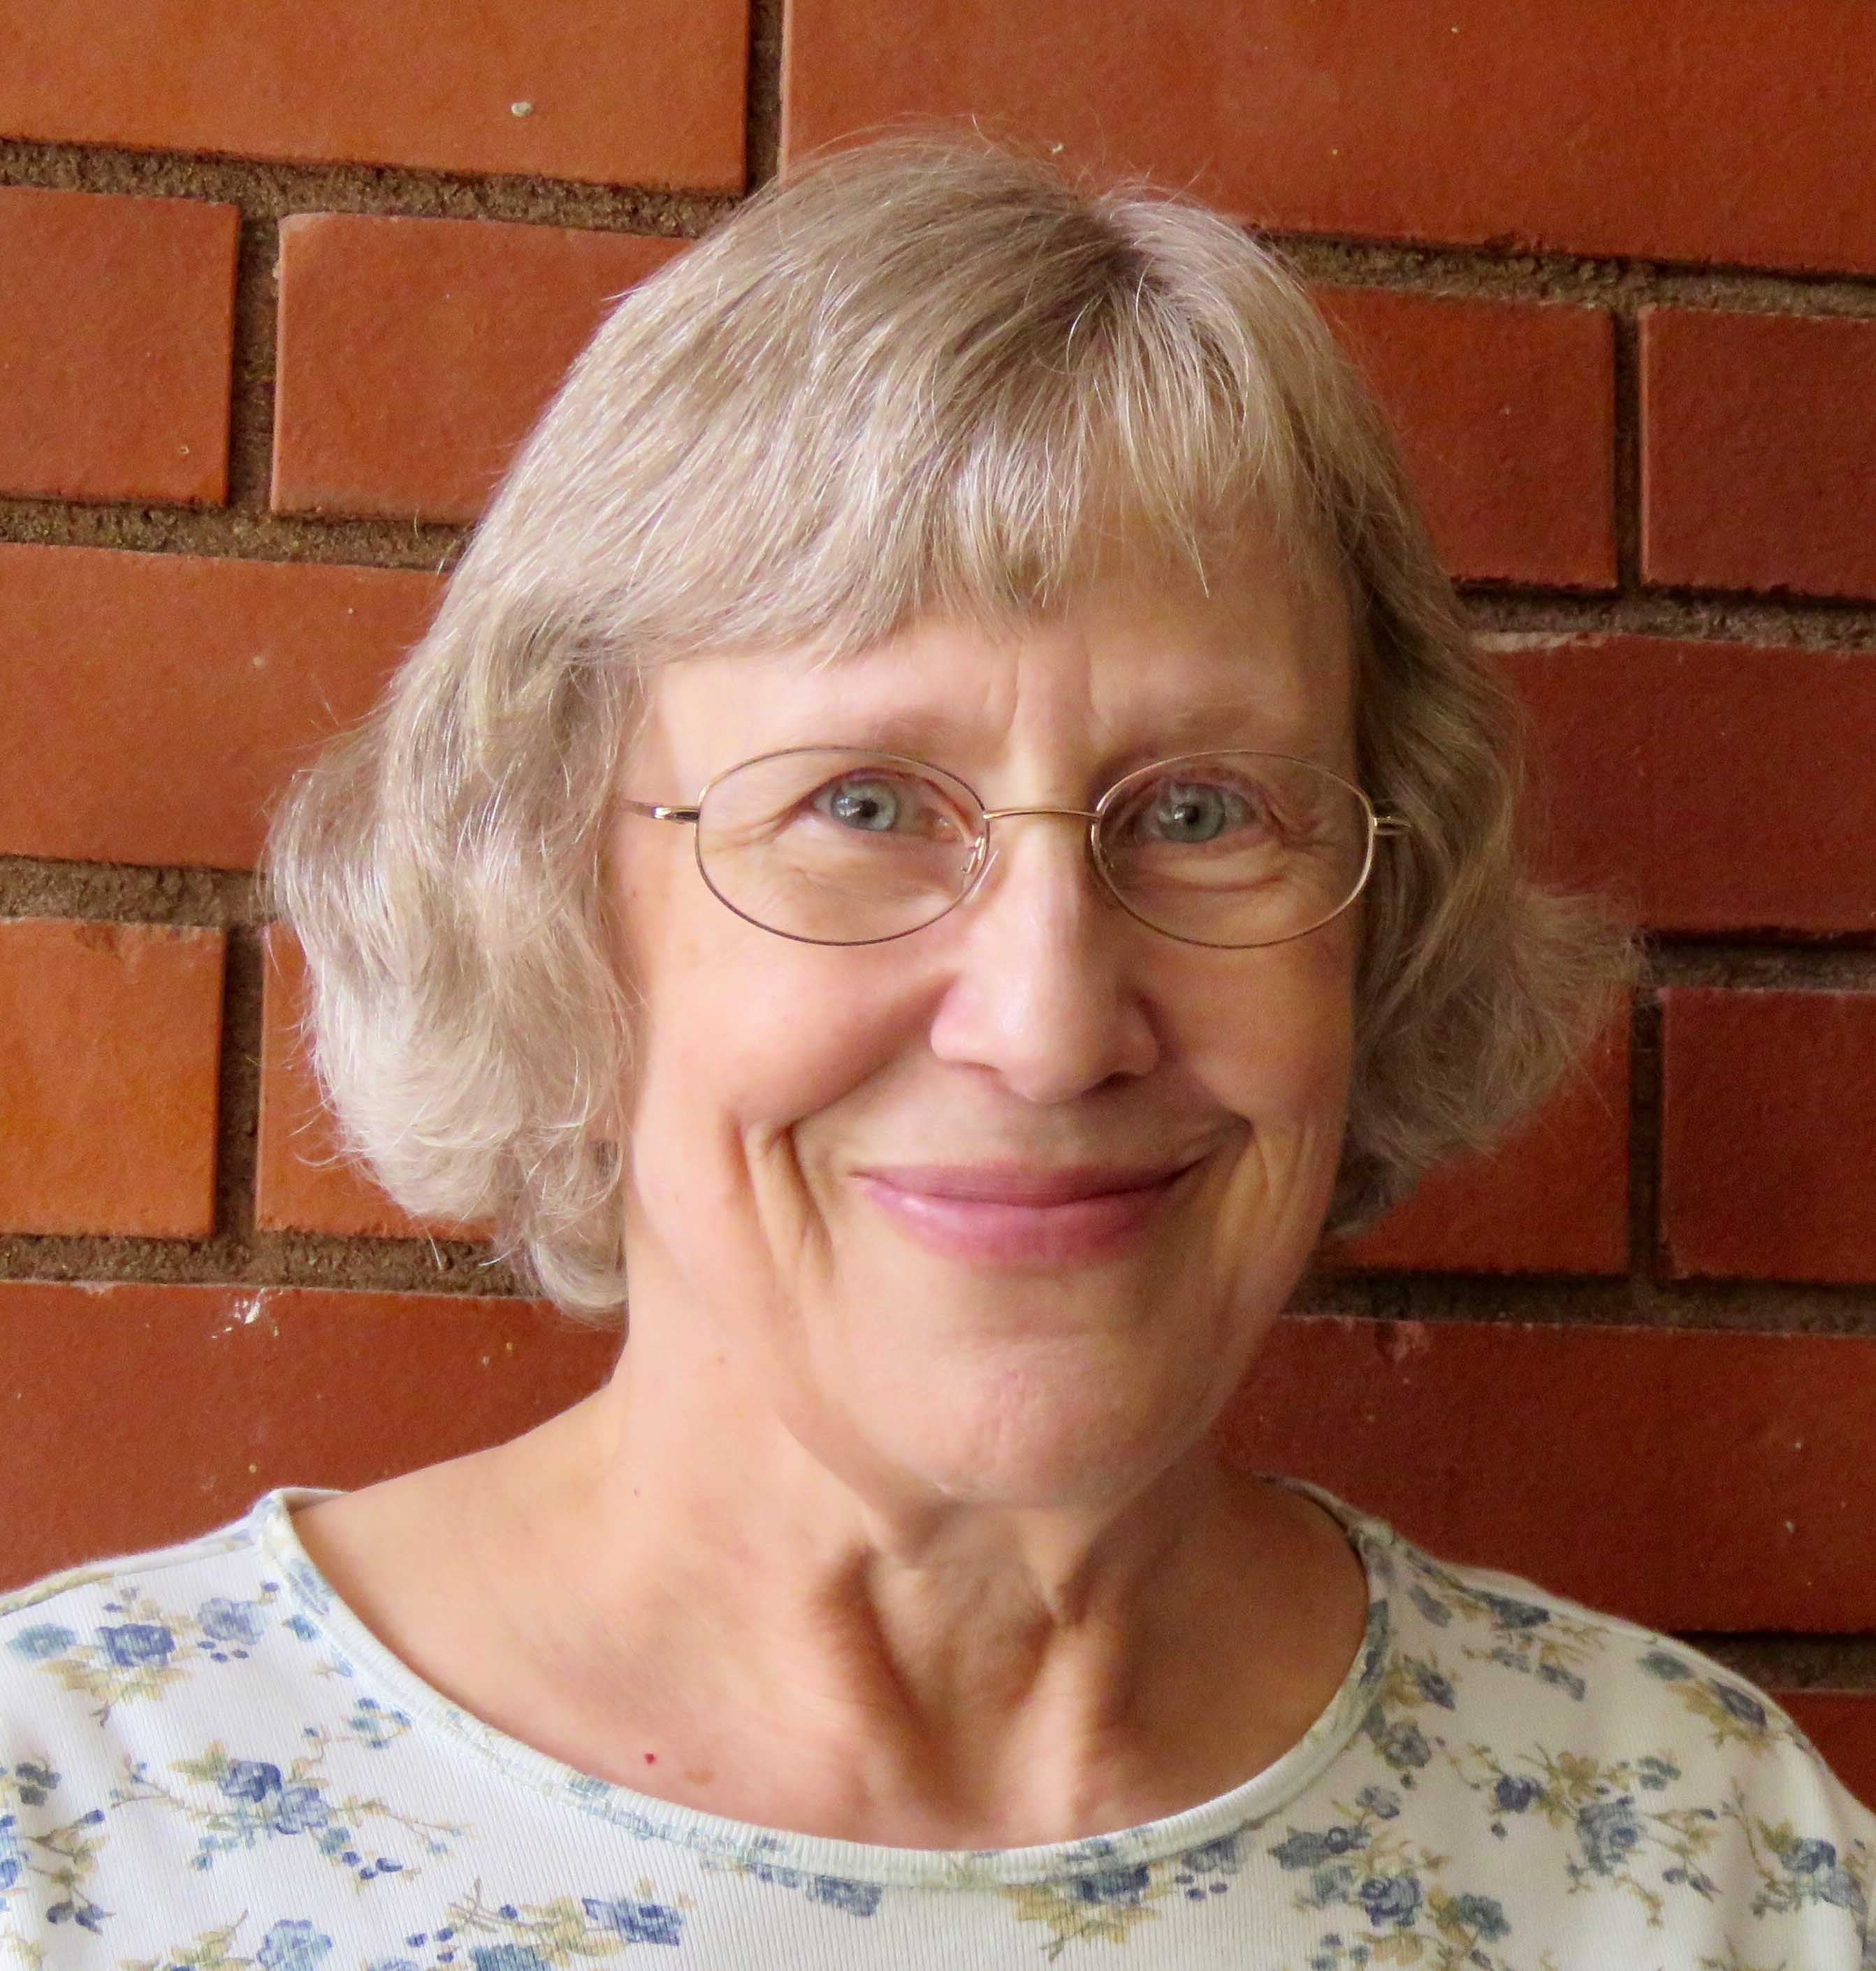 Linda Jensen